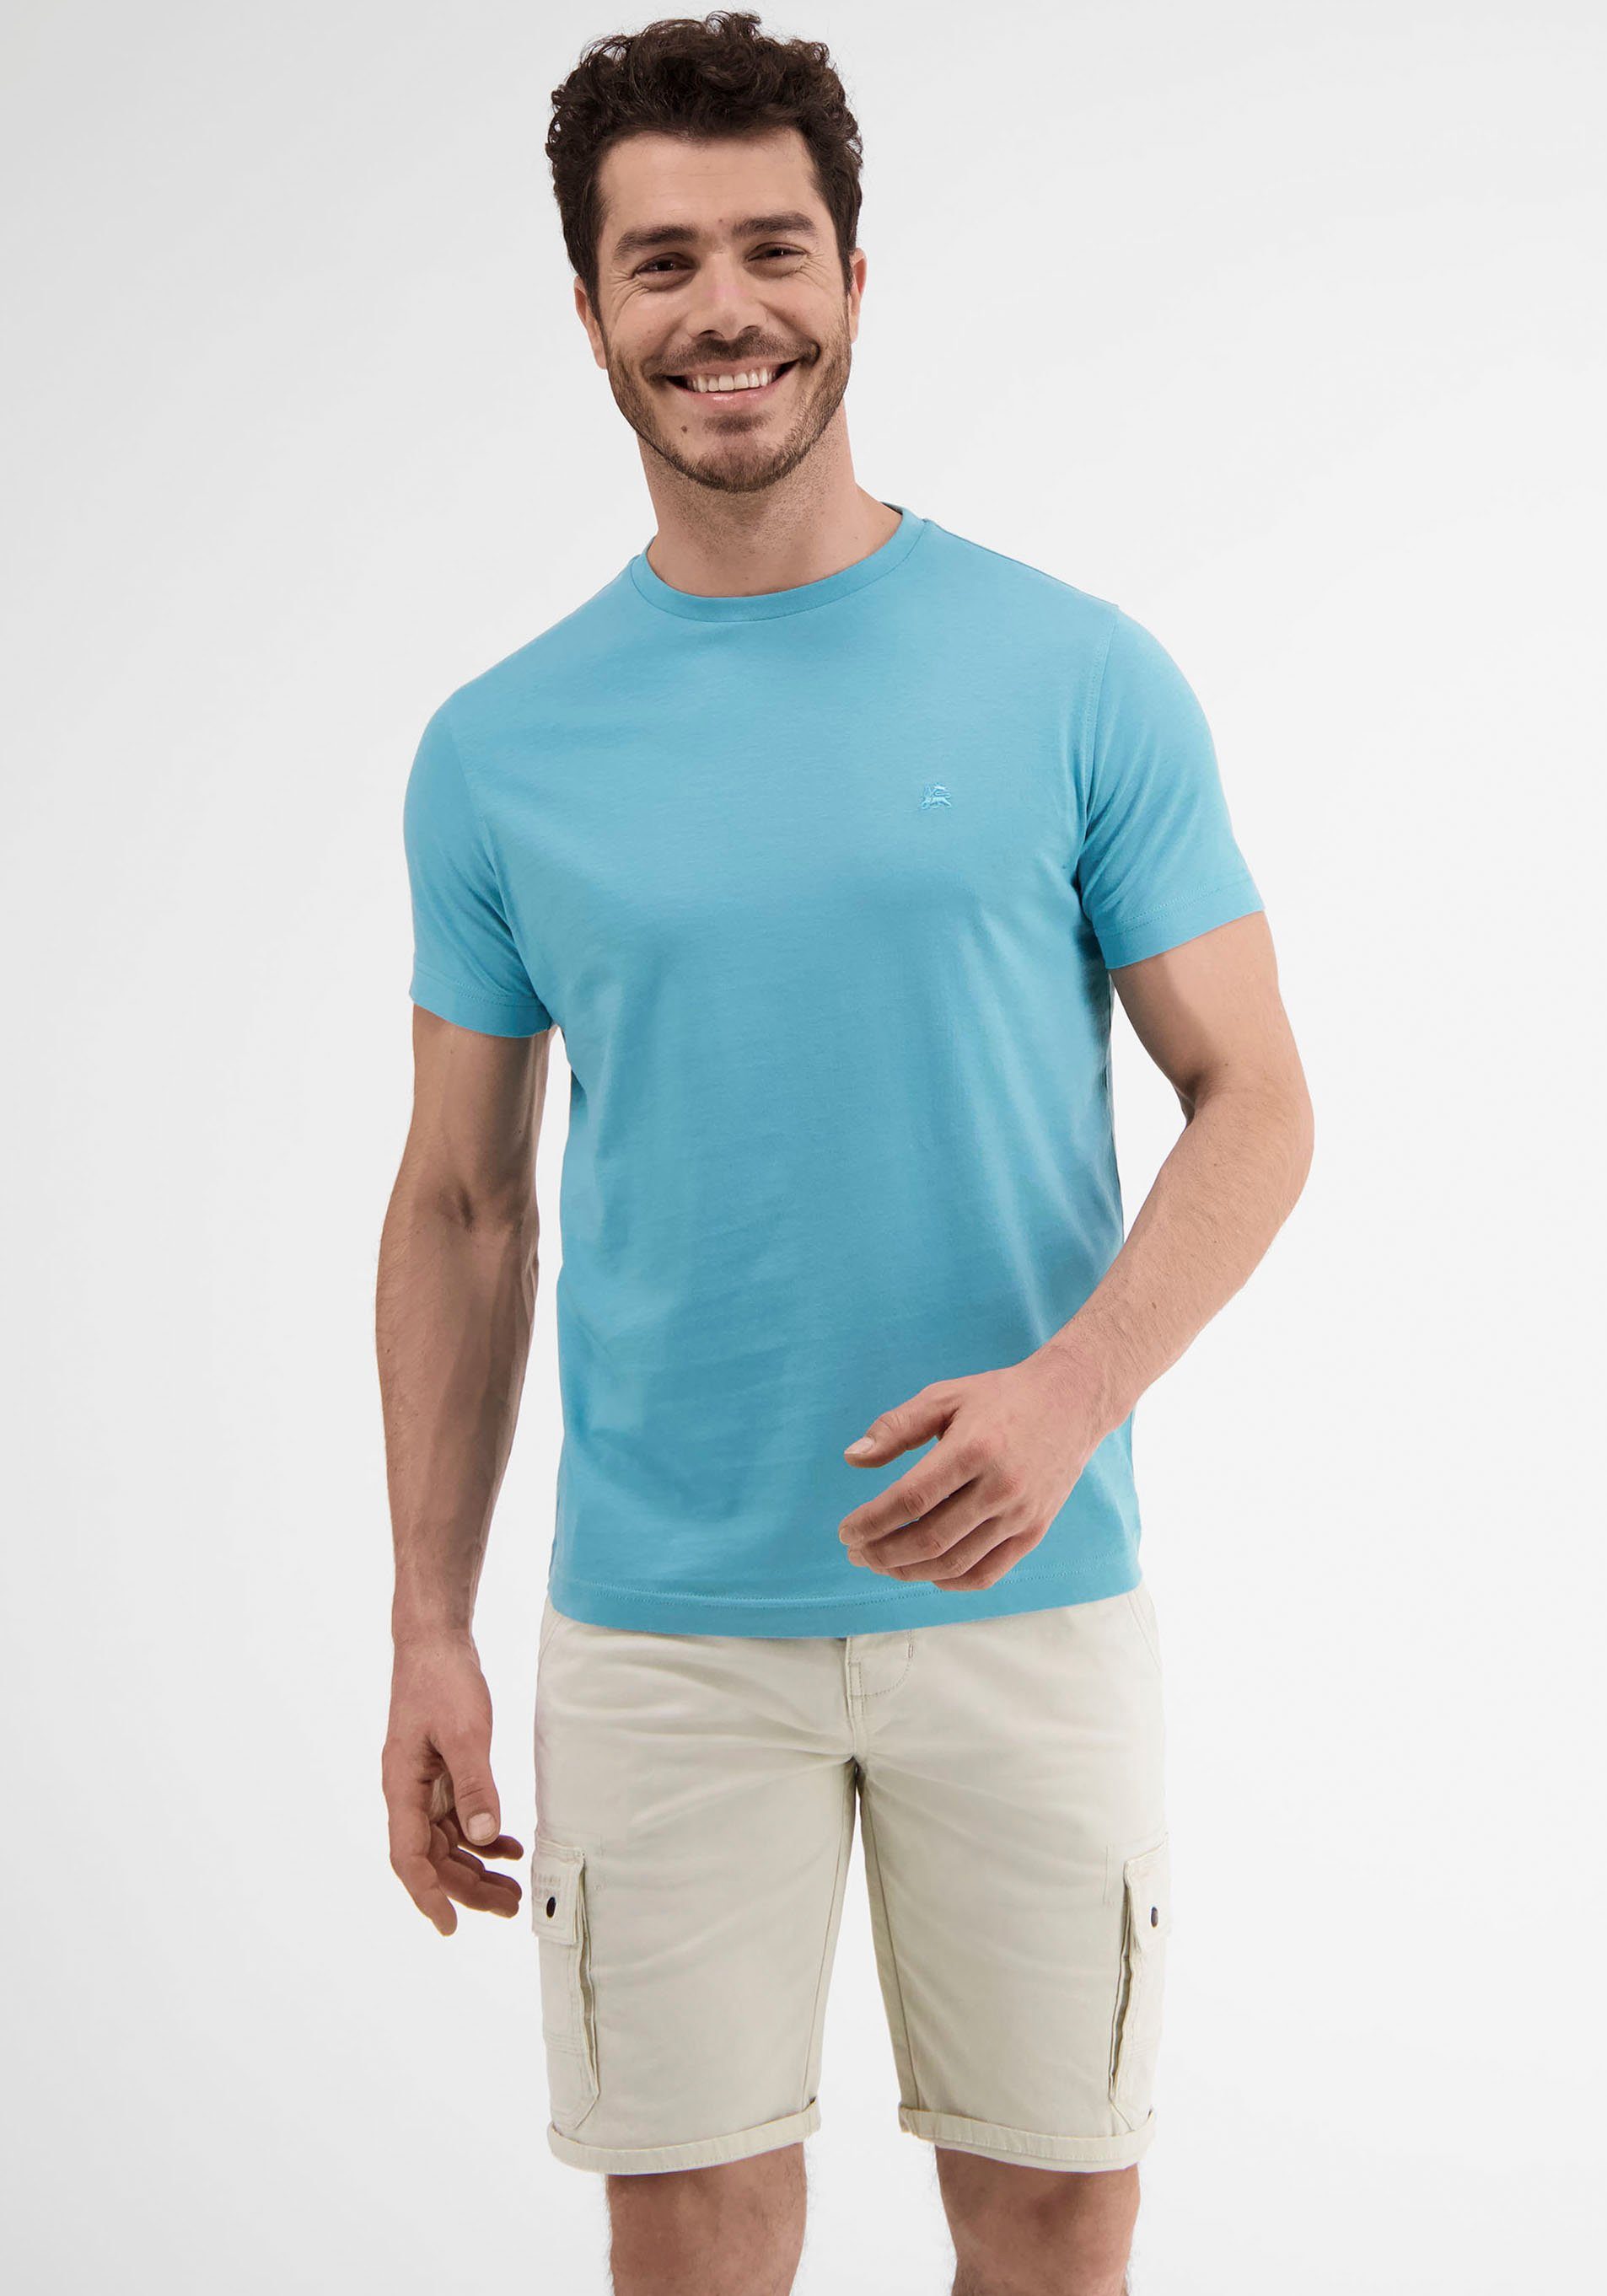 light turquoise Basic-Look T-Shirt im tonic LERROS